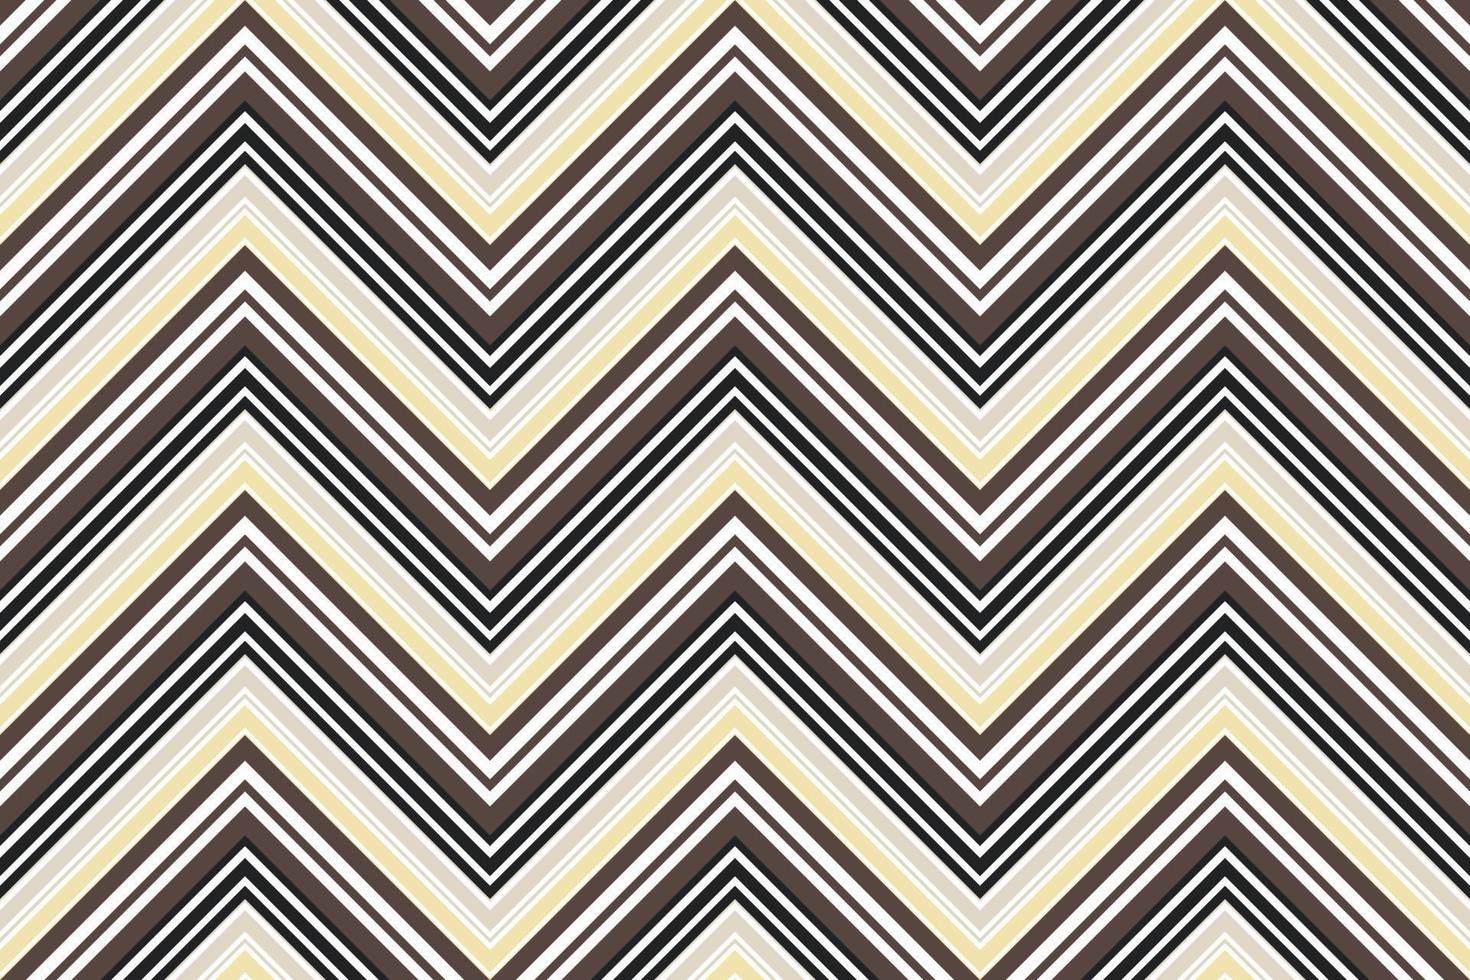 Fabric Zigzag chevron pattern digital art print summer party backdrop design vector